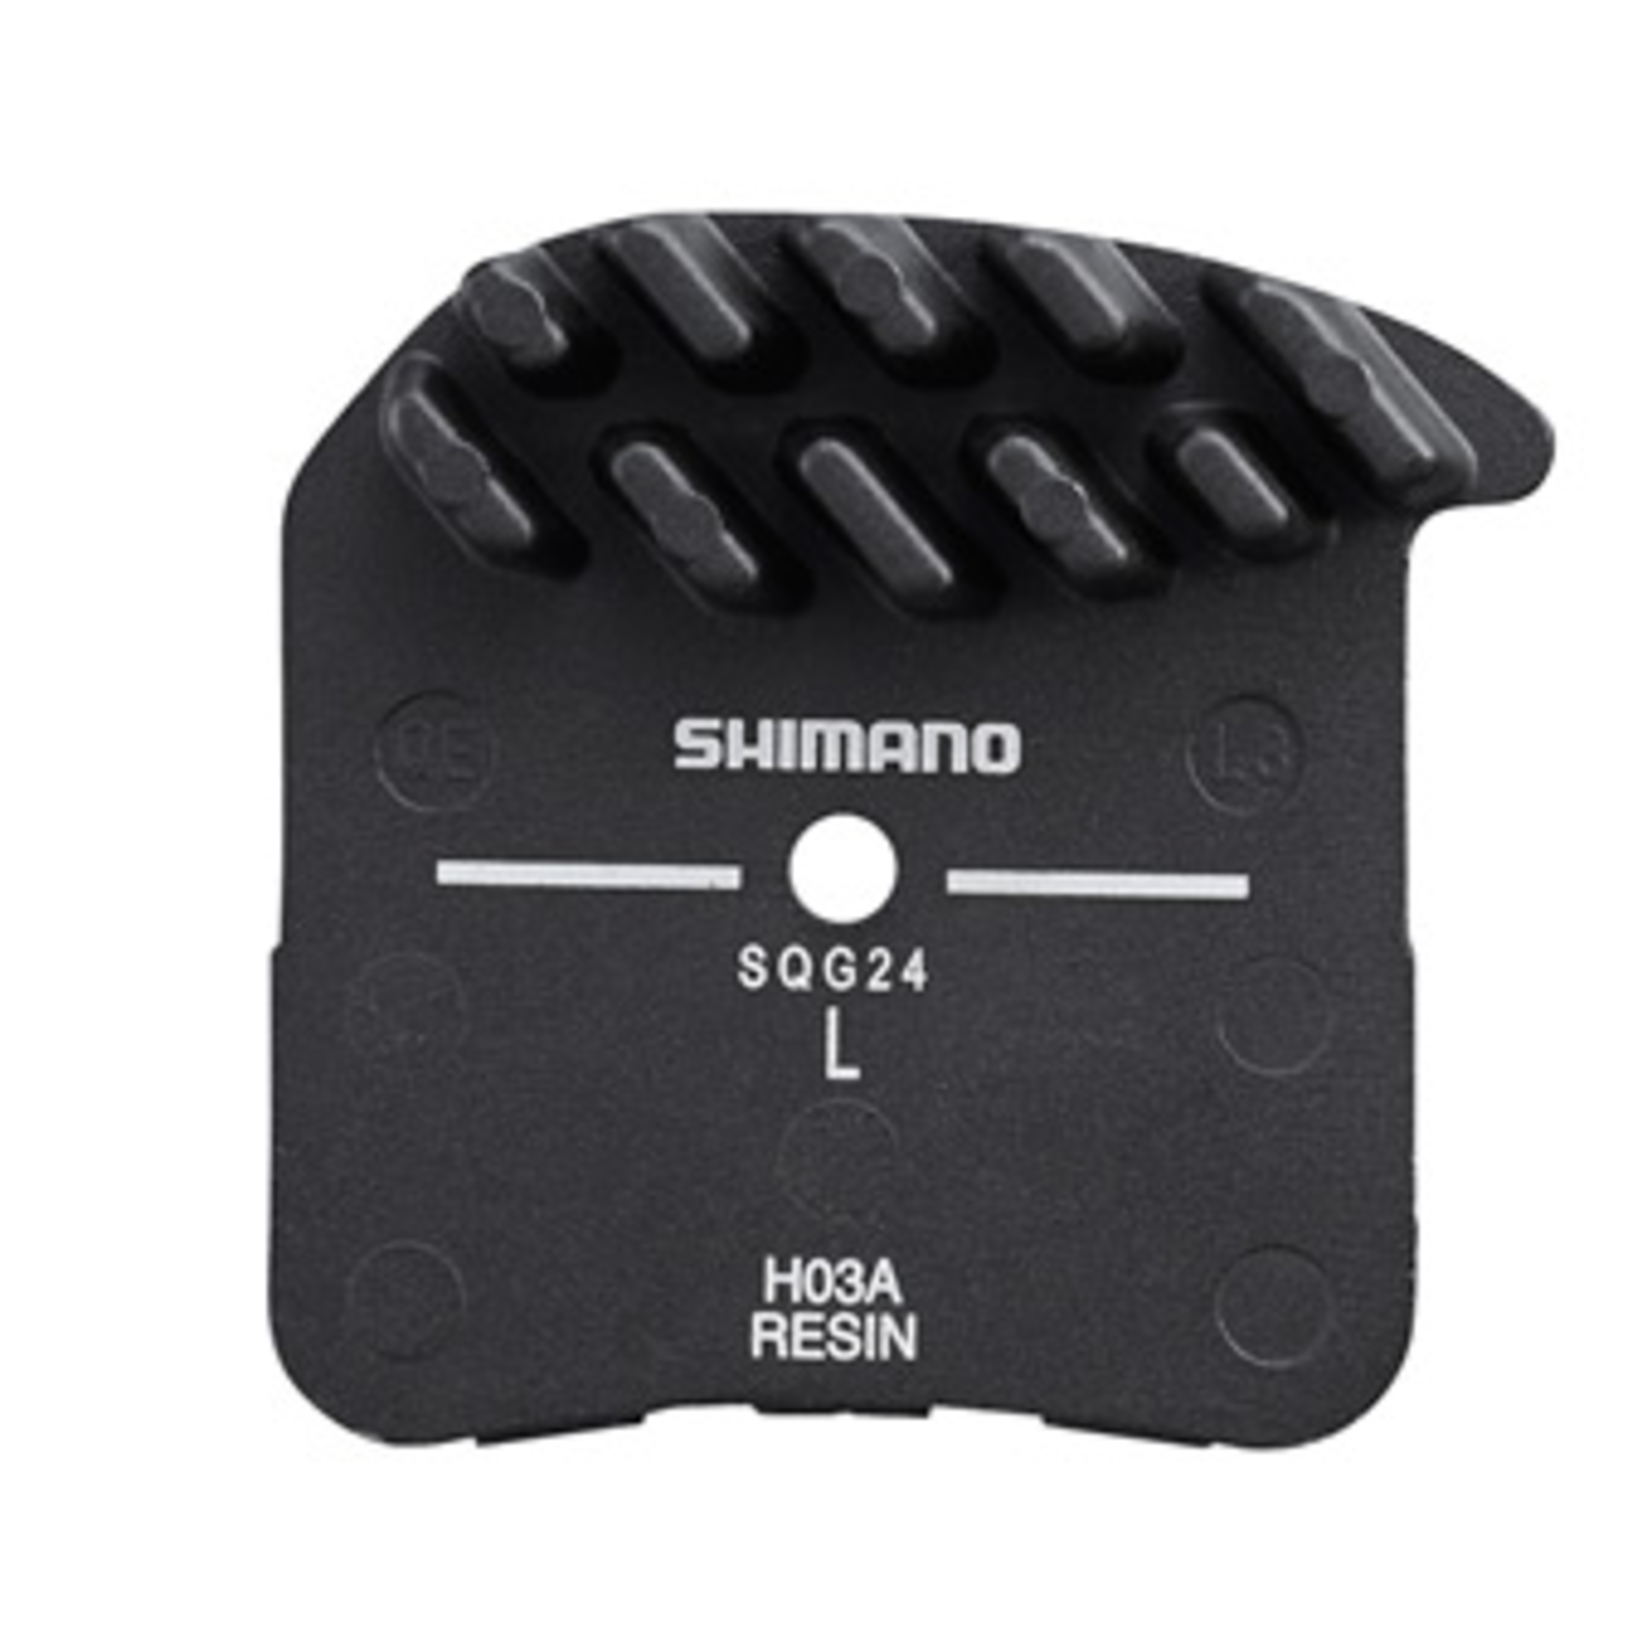 Shimano H03a Disc brake pads